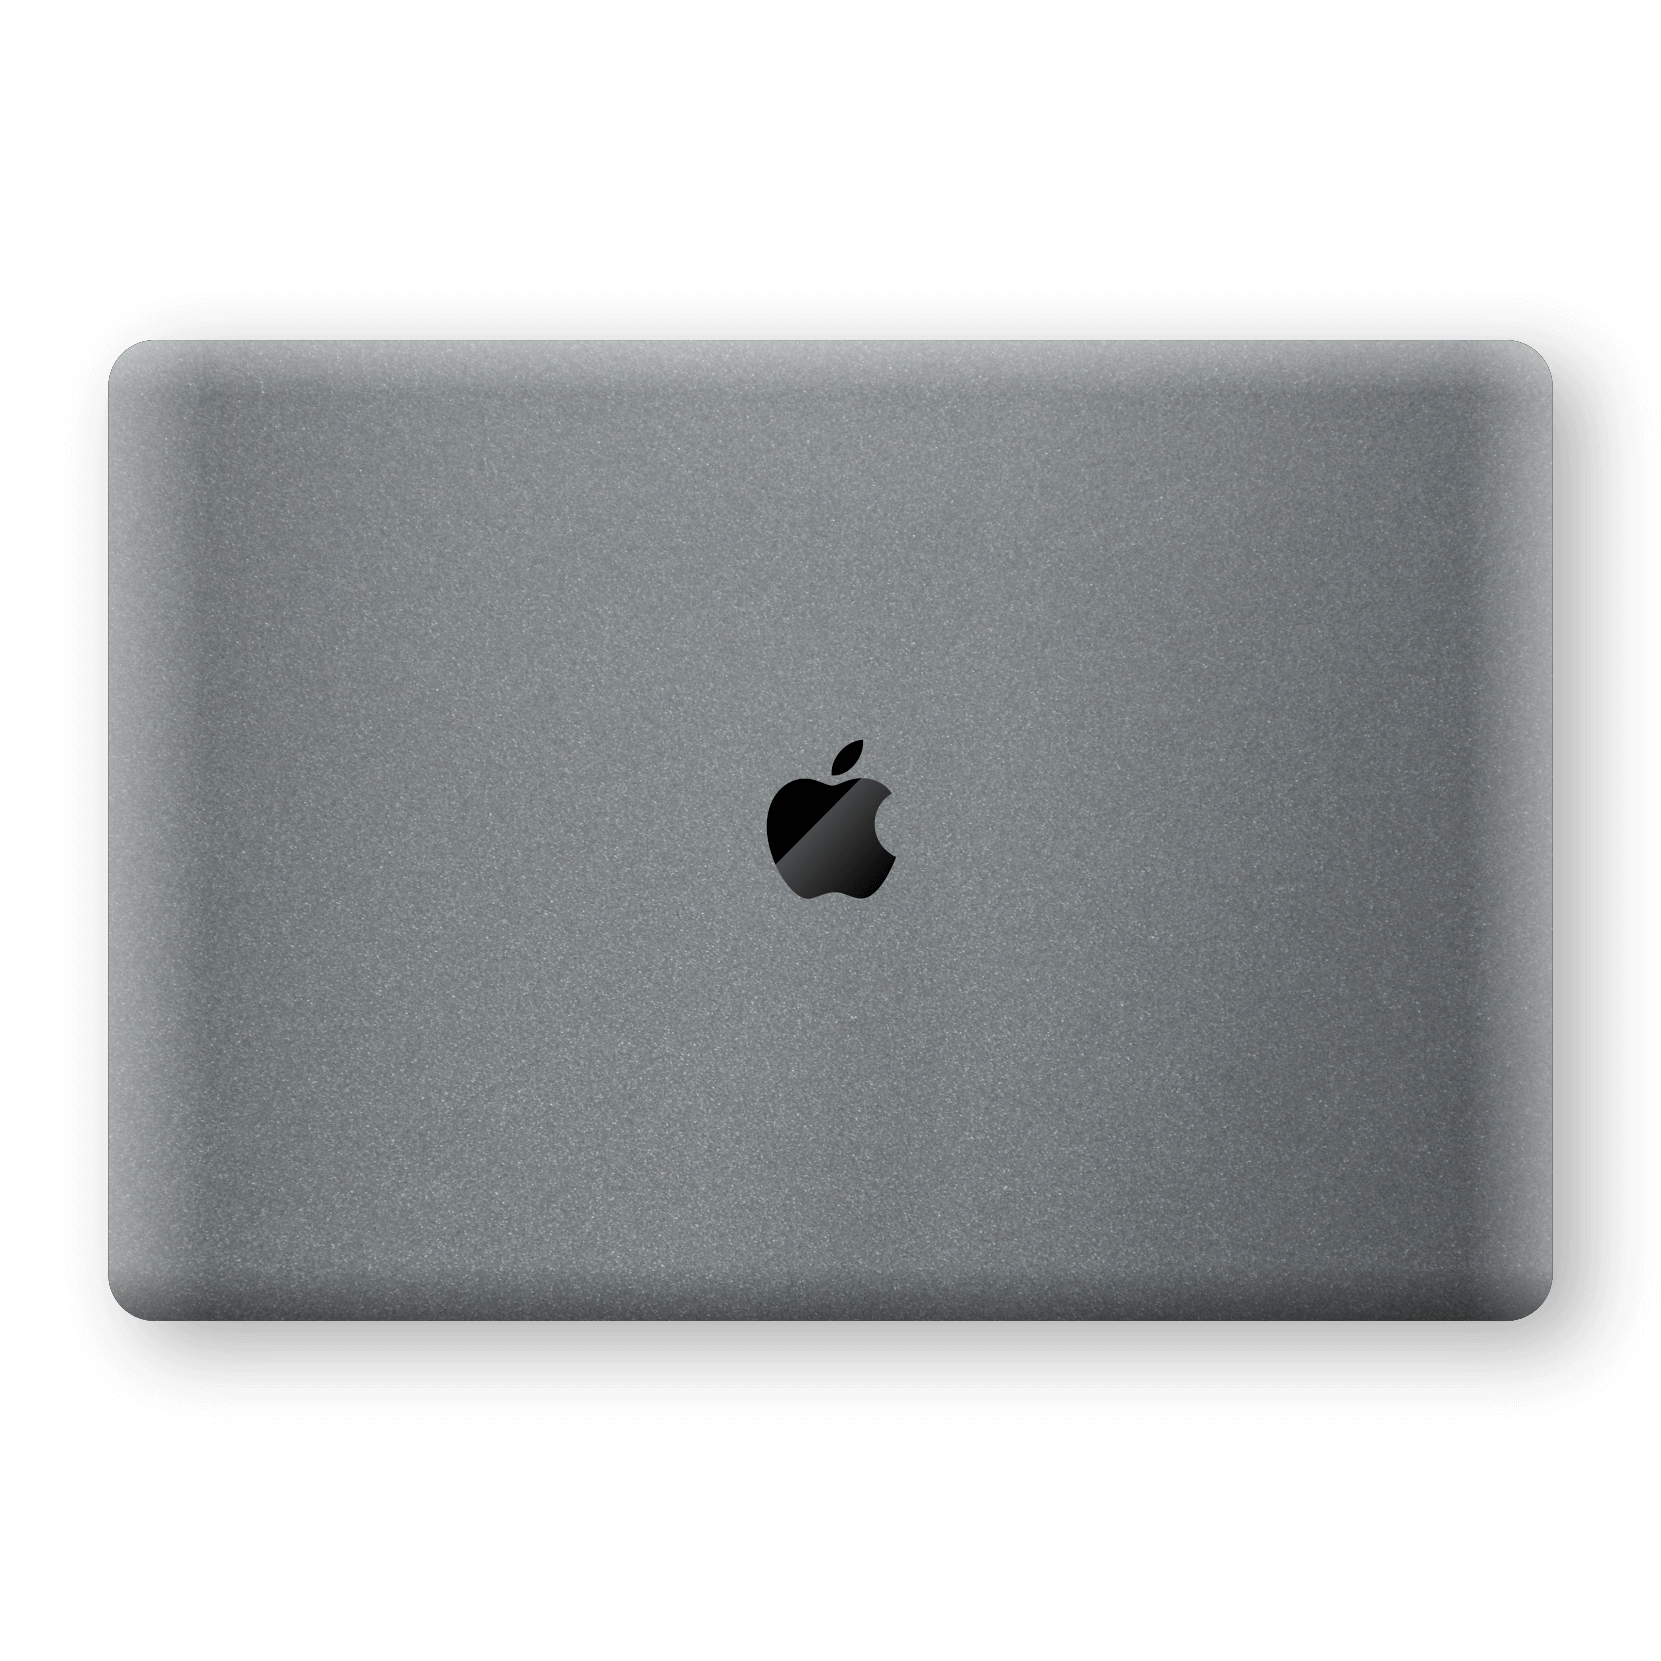 MacBook Pro 15" Touch Bar Space Grey Matt Metallic Skin, Decal, Wrap, Protector, Cover by EasySkinz | EasySkinz.com